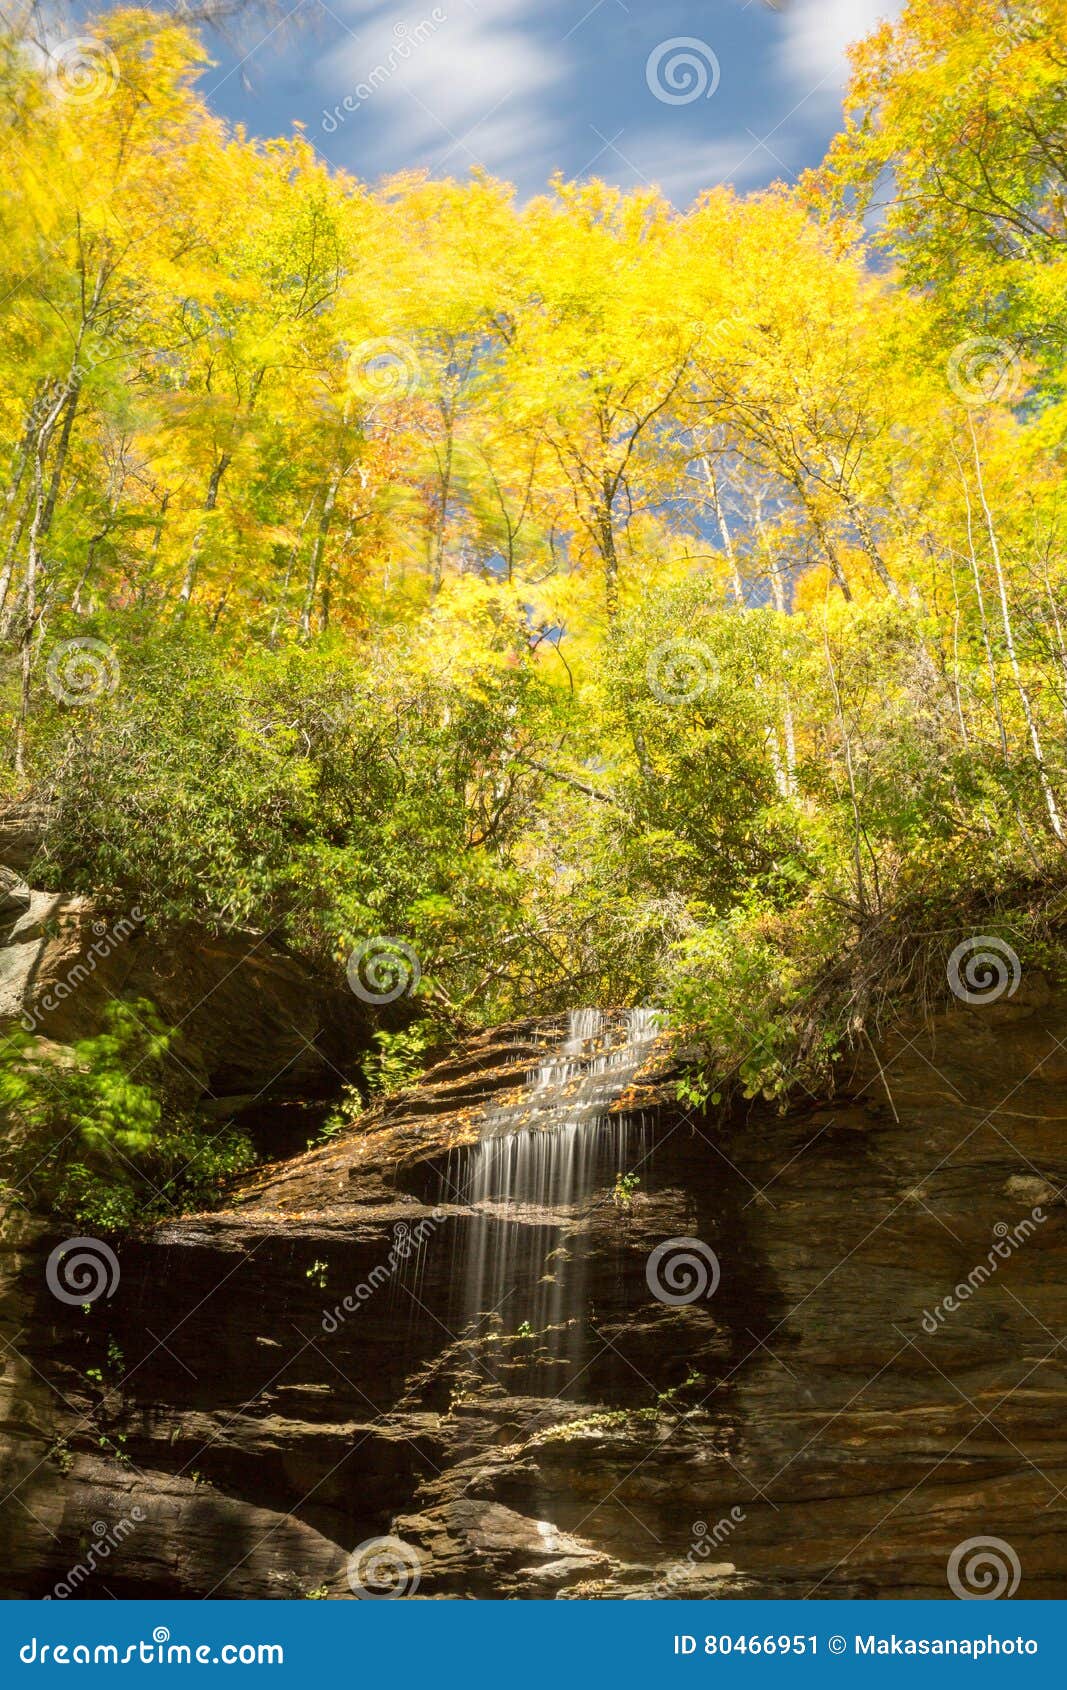 waterfall in the appalachians